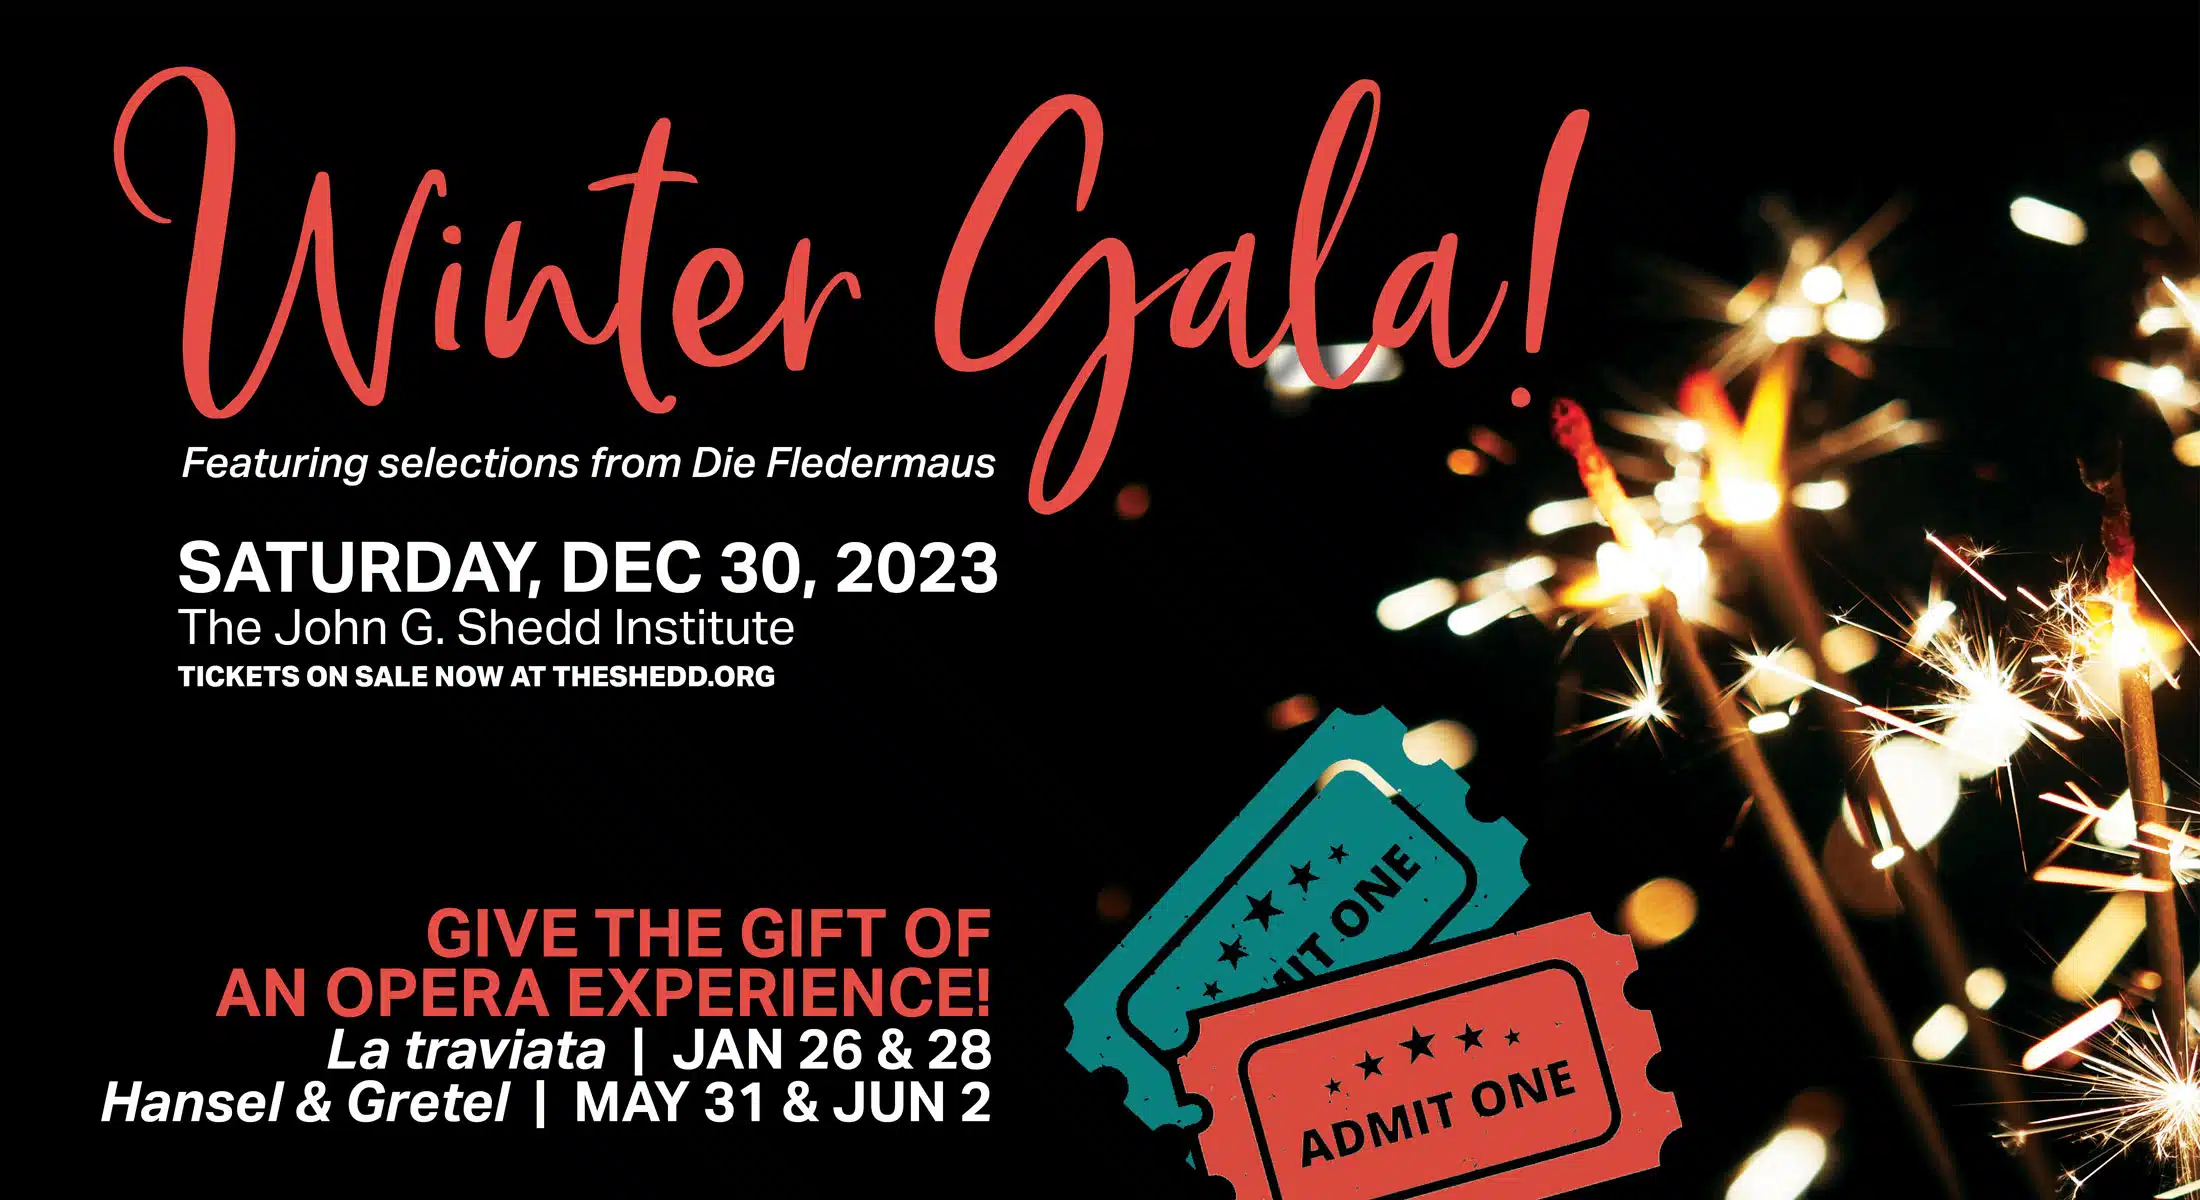 Eugene Opera's Winter Gala - Saturday, December 30, 2023